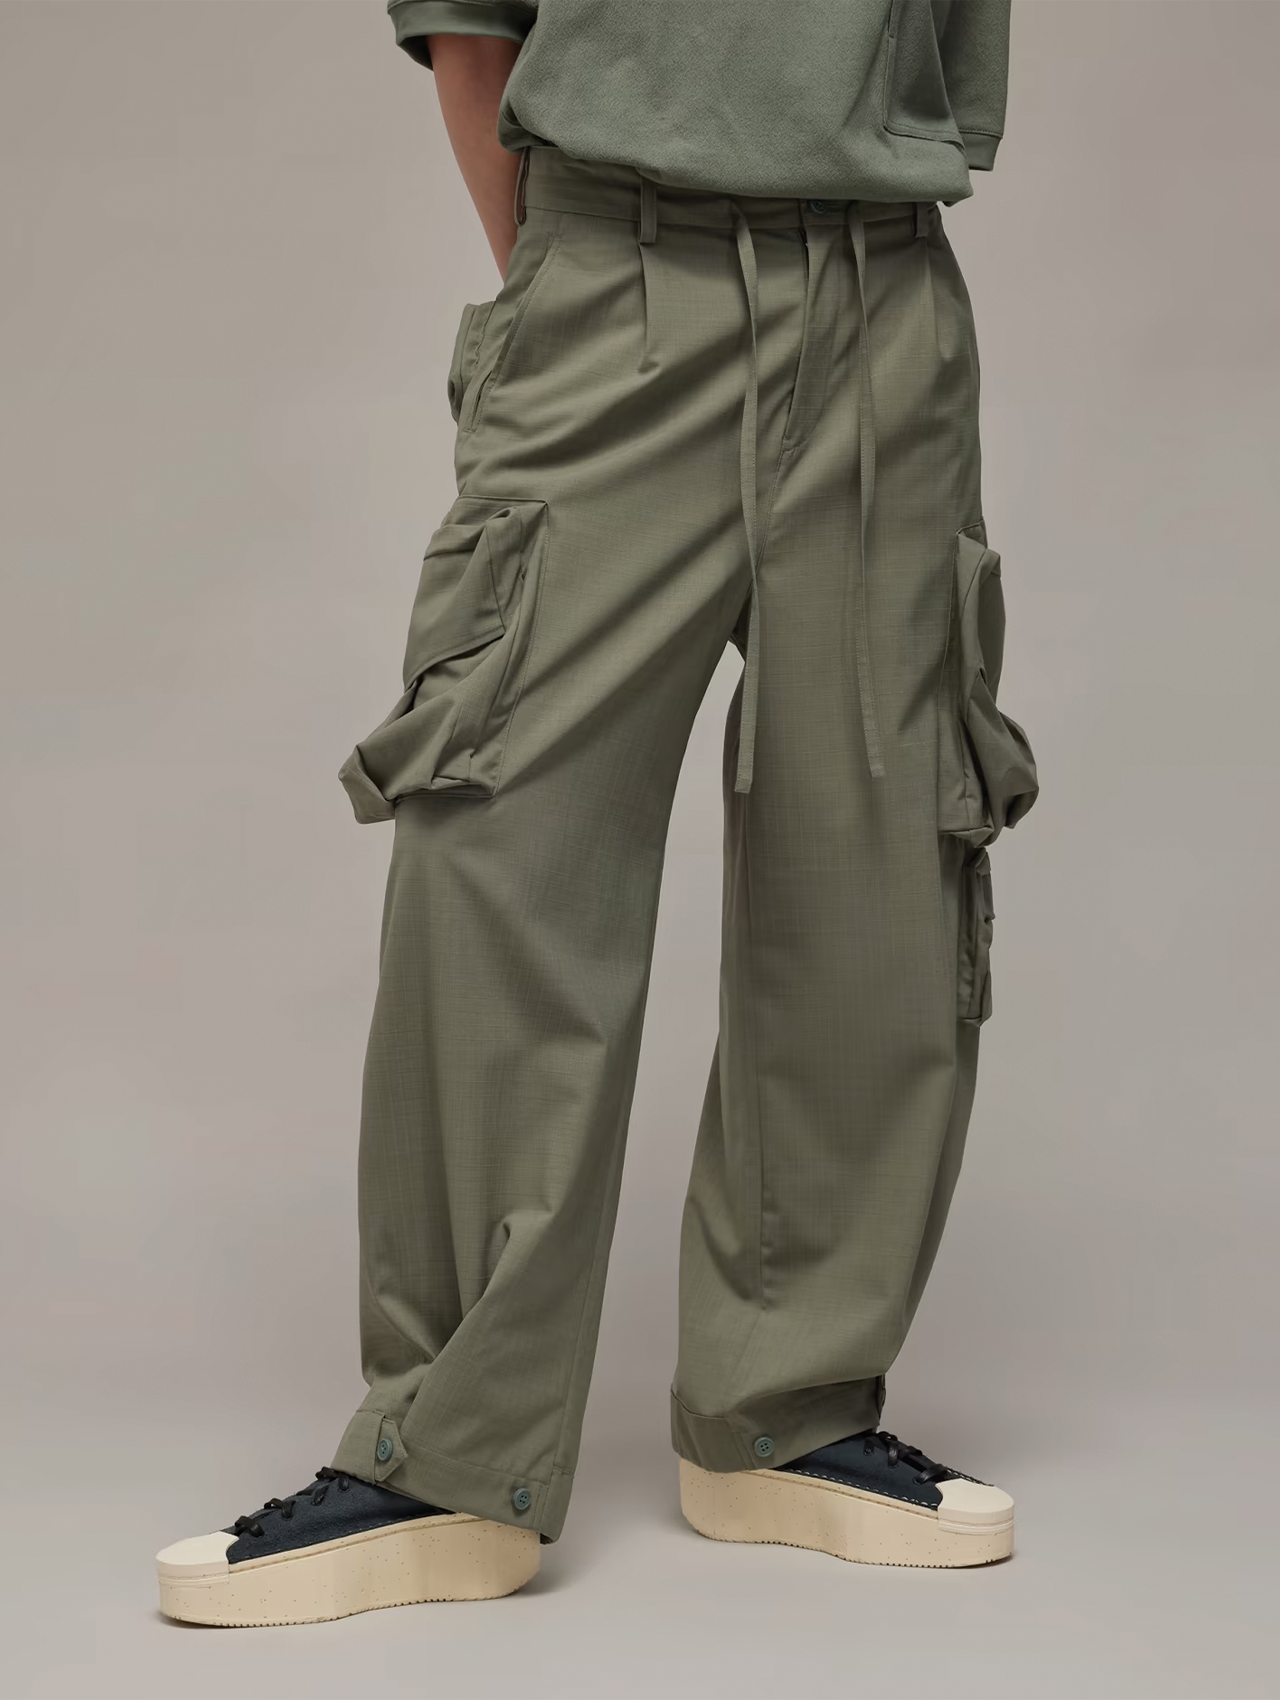 Y-3 Stone Green Nylon Cuffed Pants